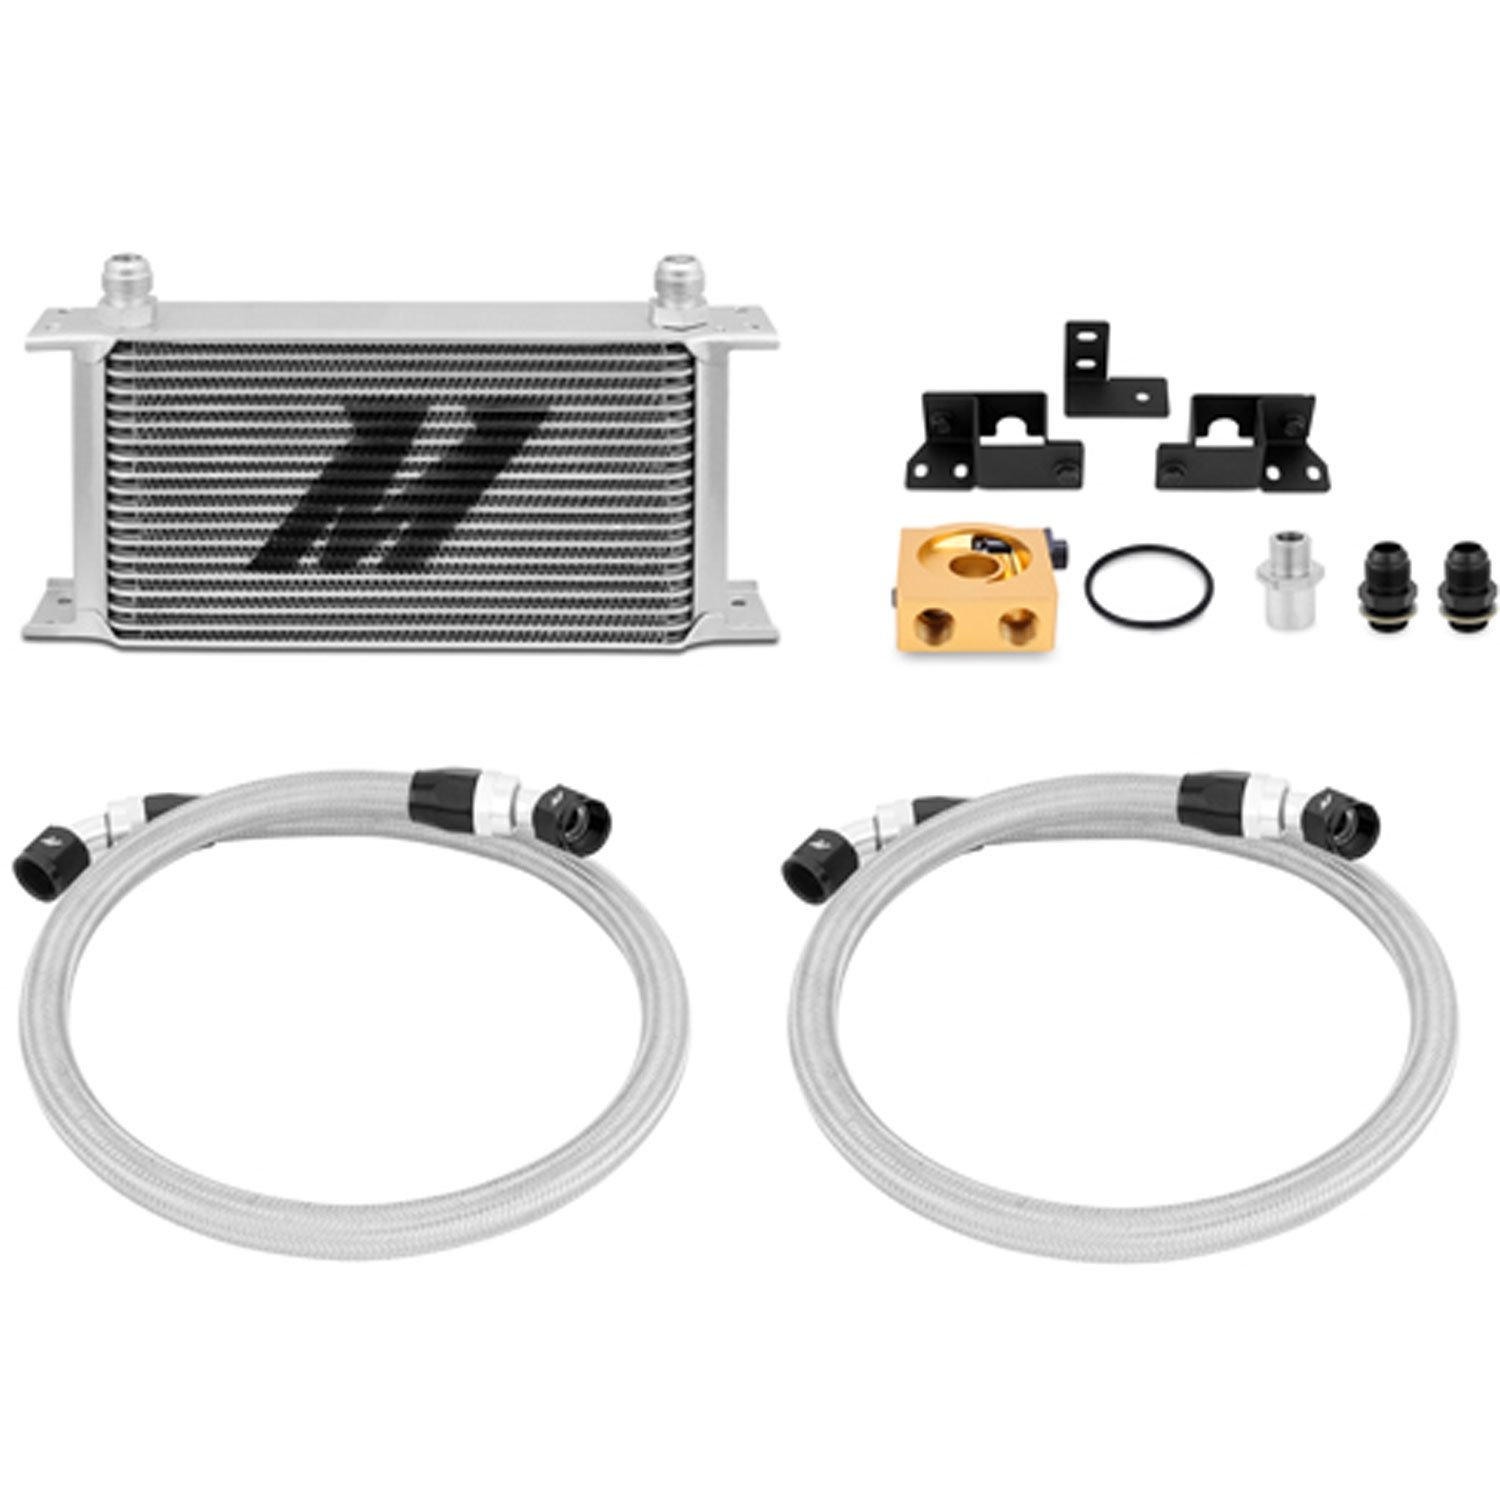 Jeep Wrangler JK Thermostatic Oil Cooler Kit -